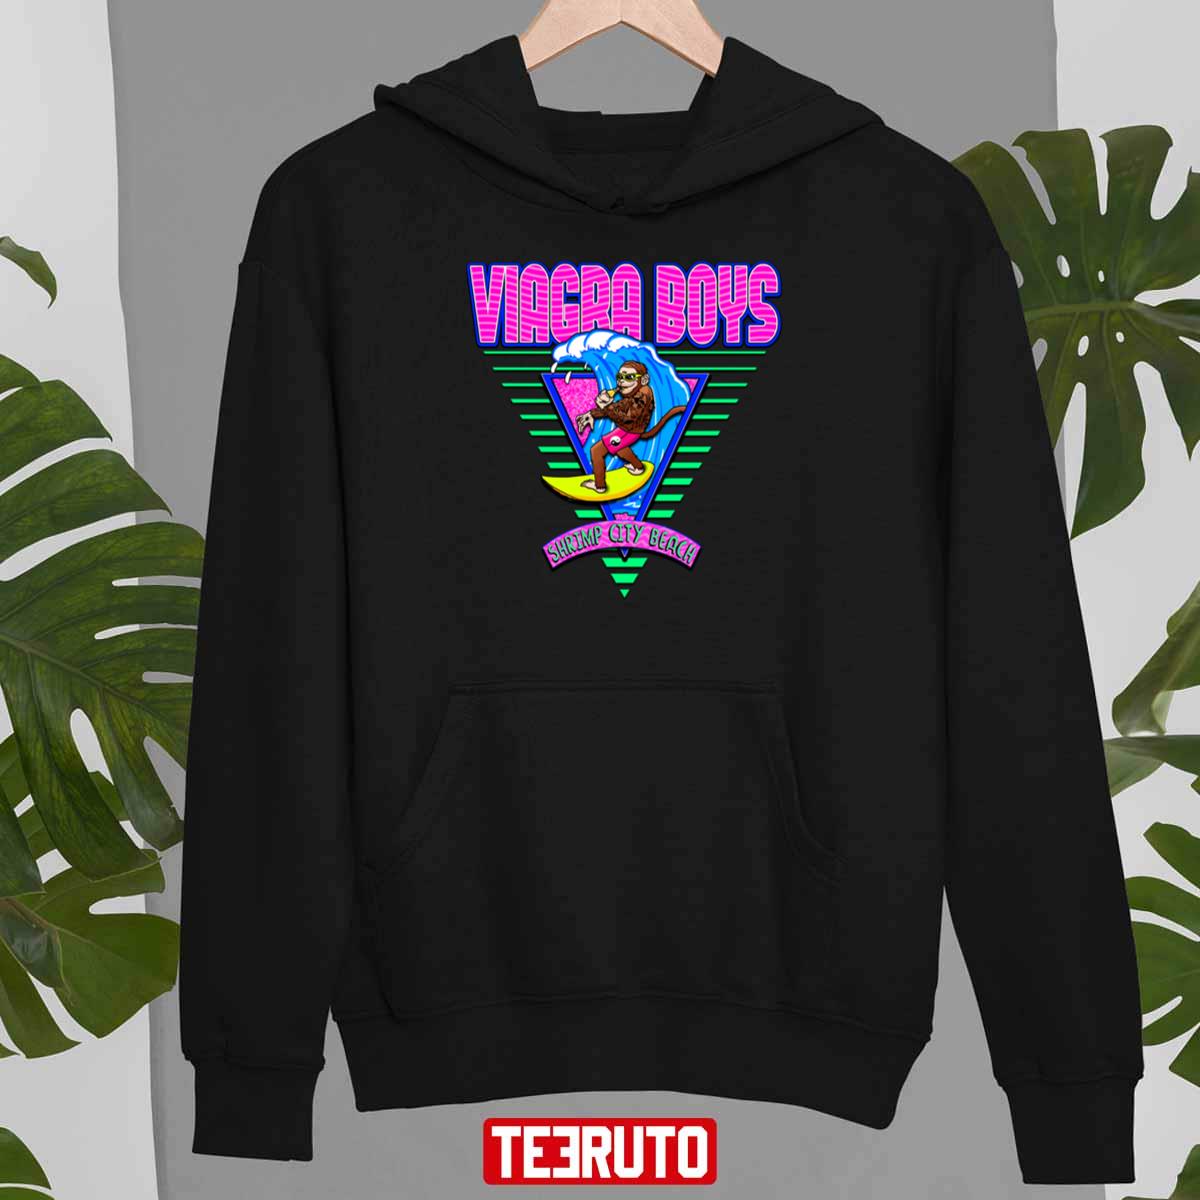 Viagra Boys Shrimp City Beach Funny Unisex T-Shirt